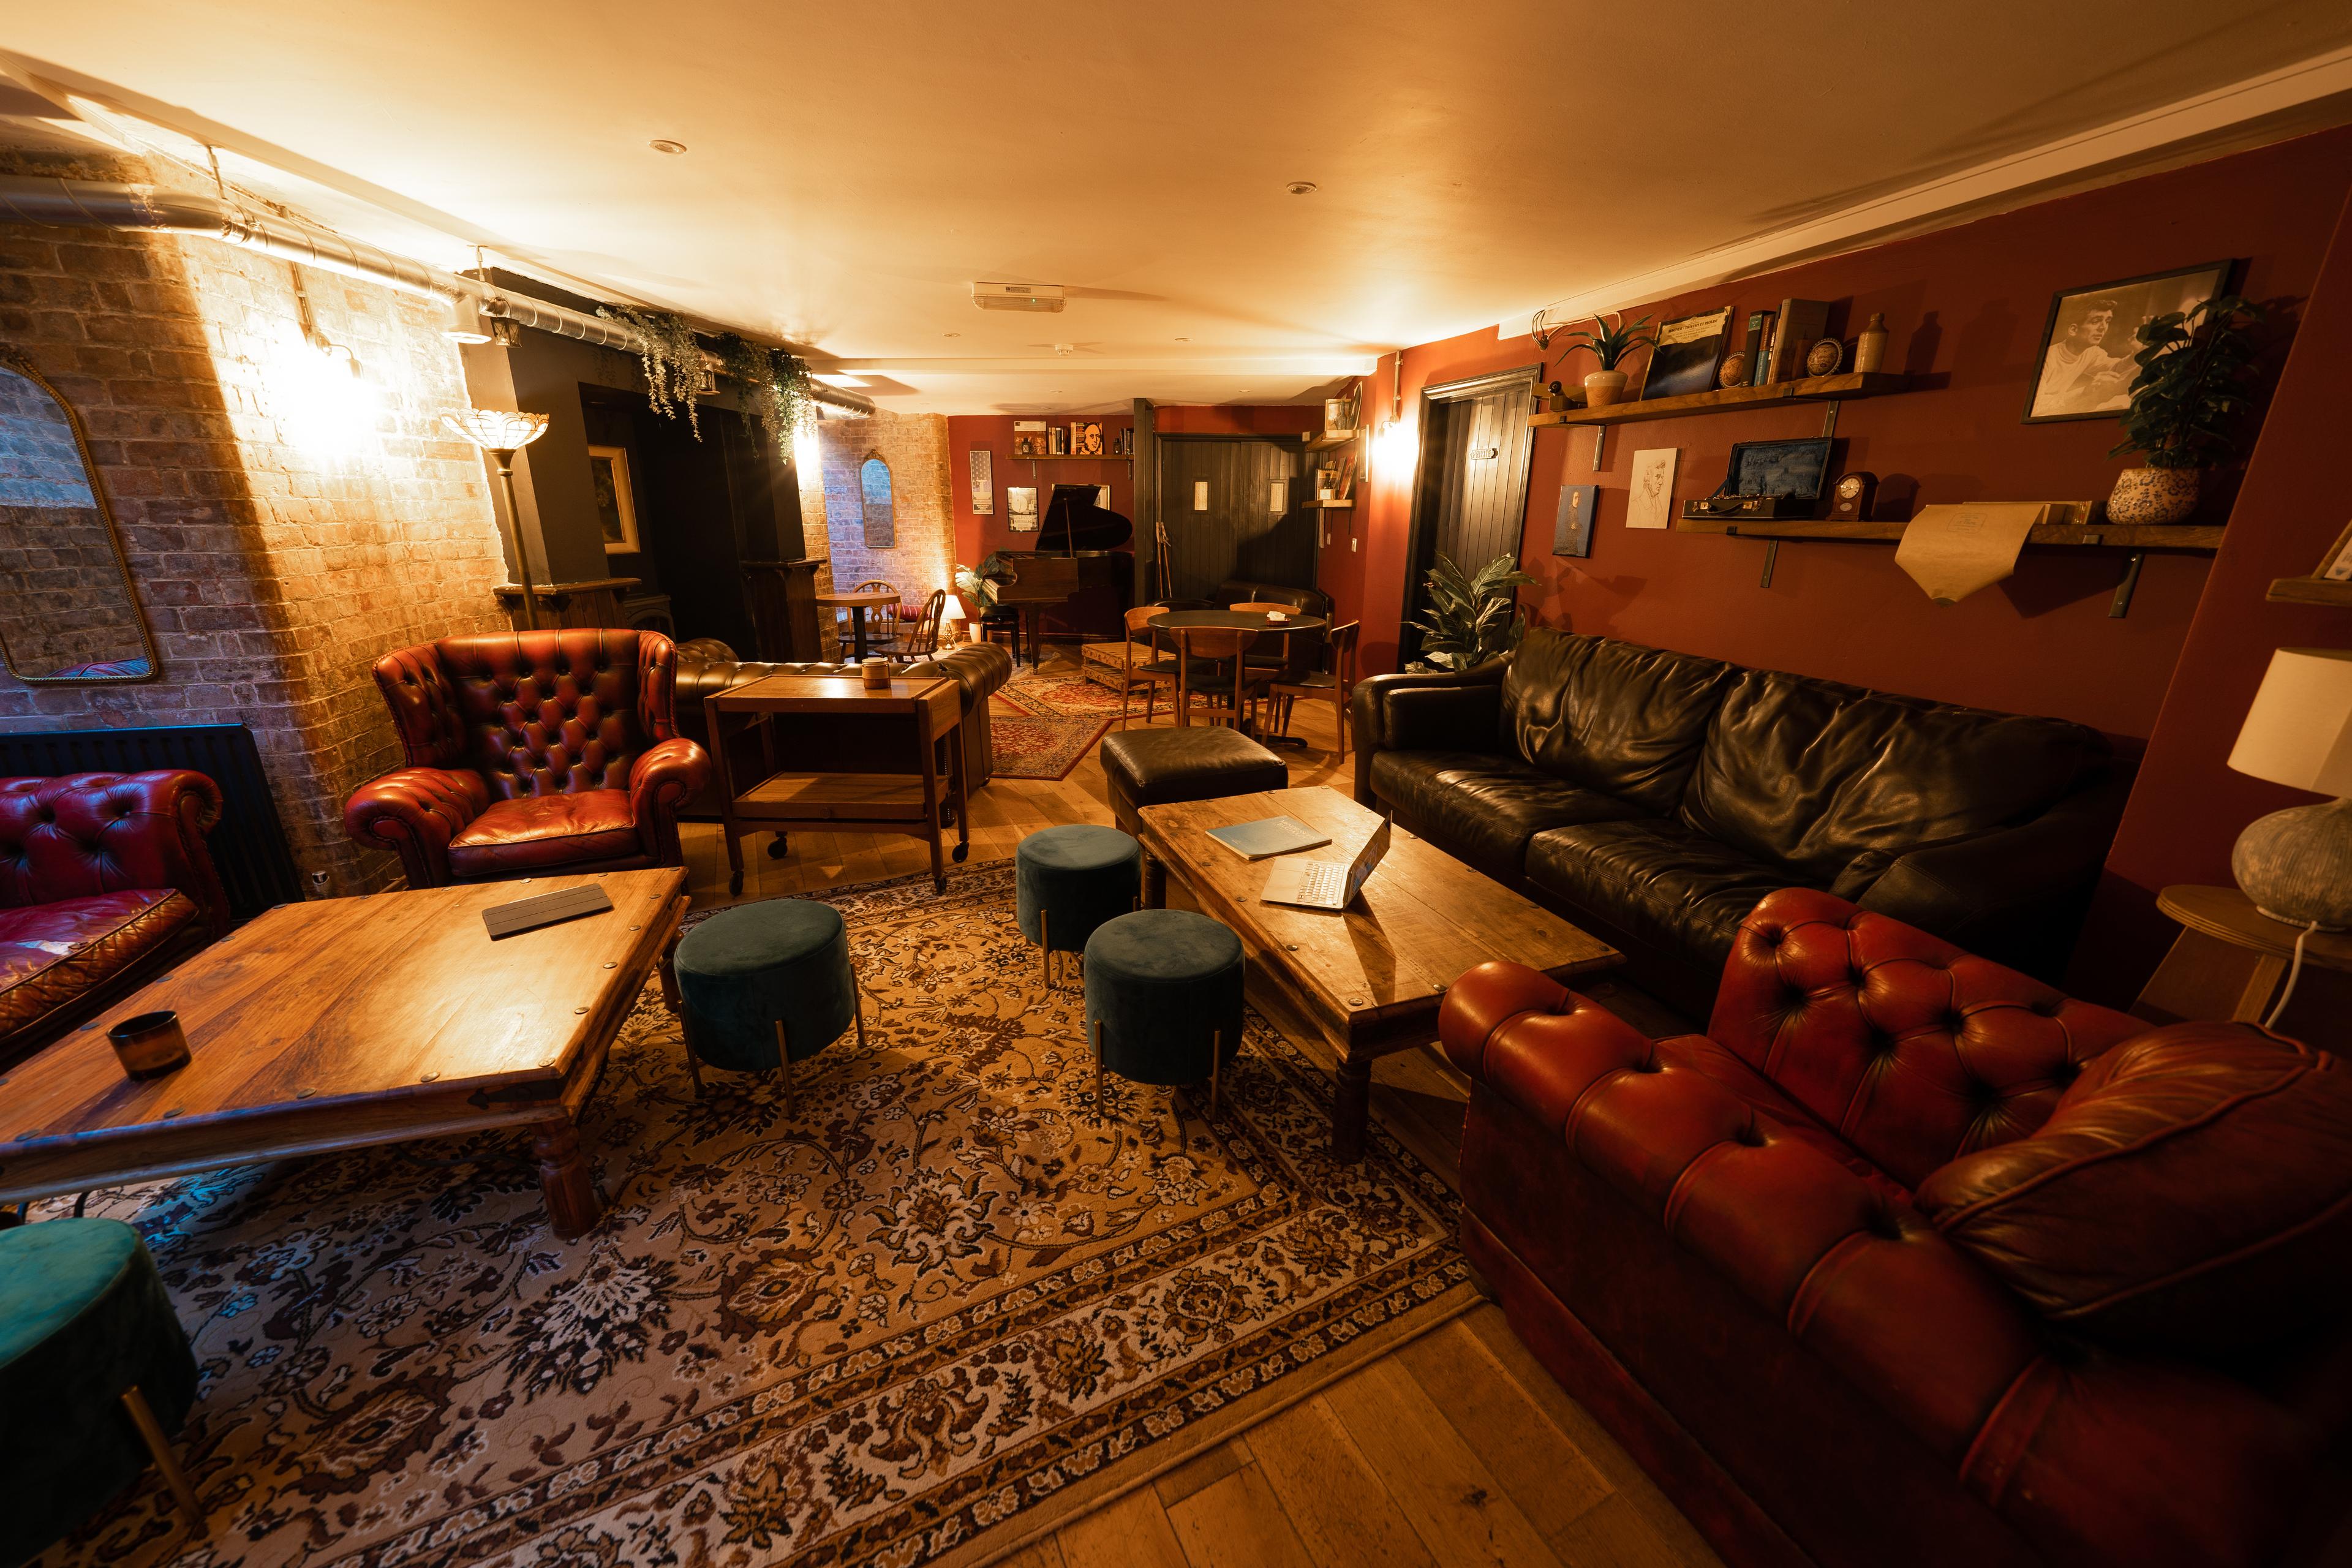 The Lounge, Fidelio Cafe photo #1